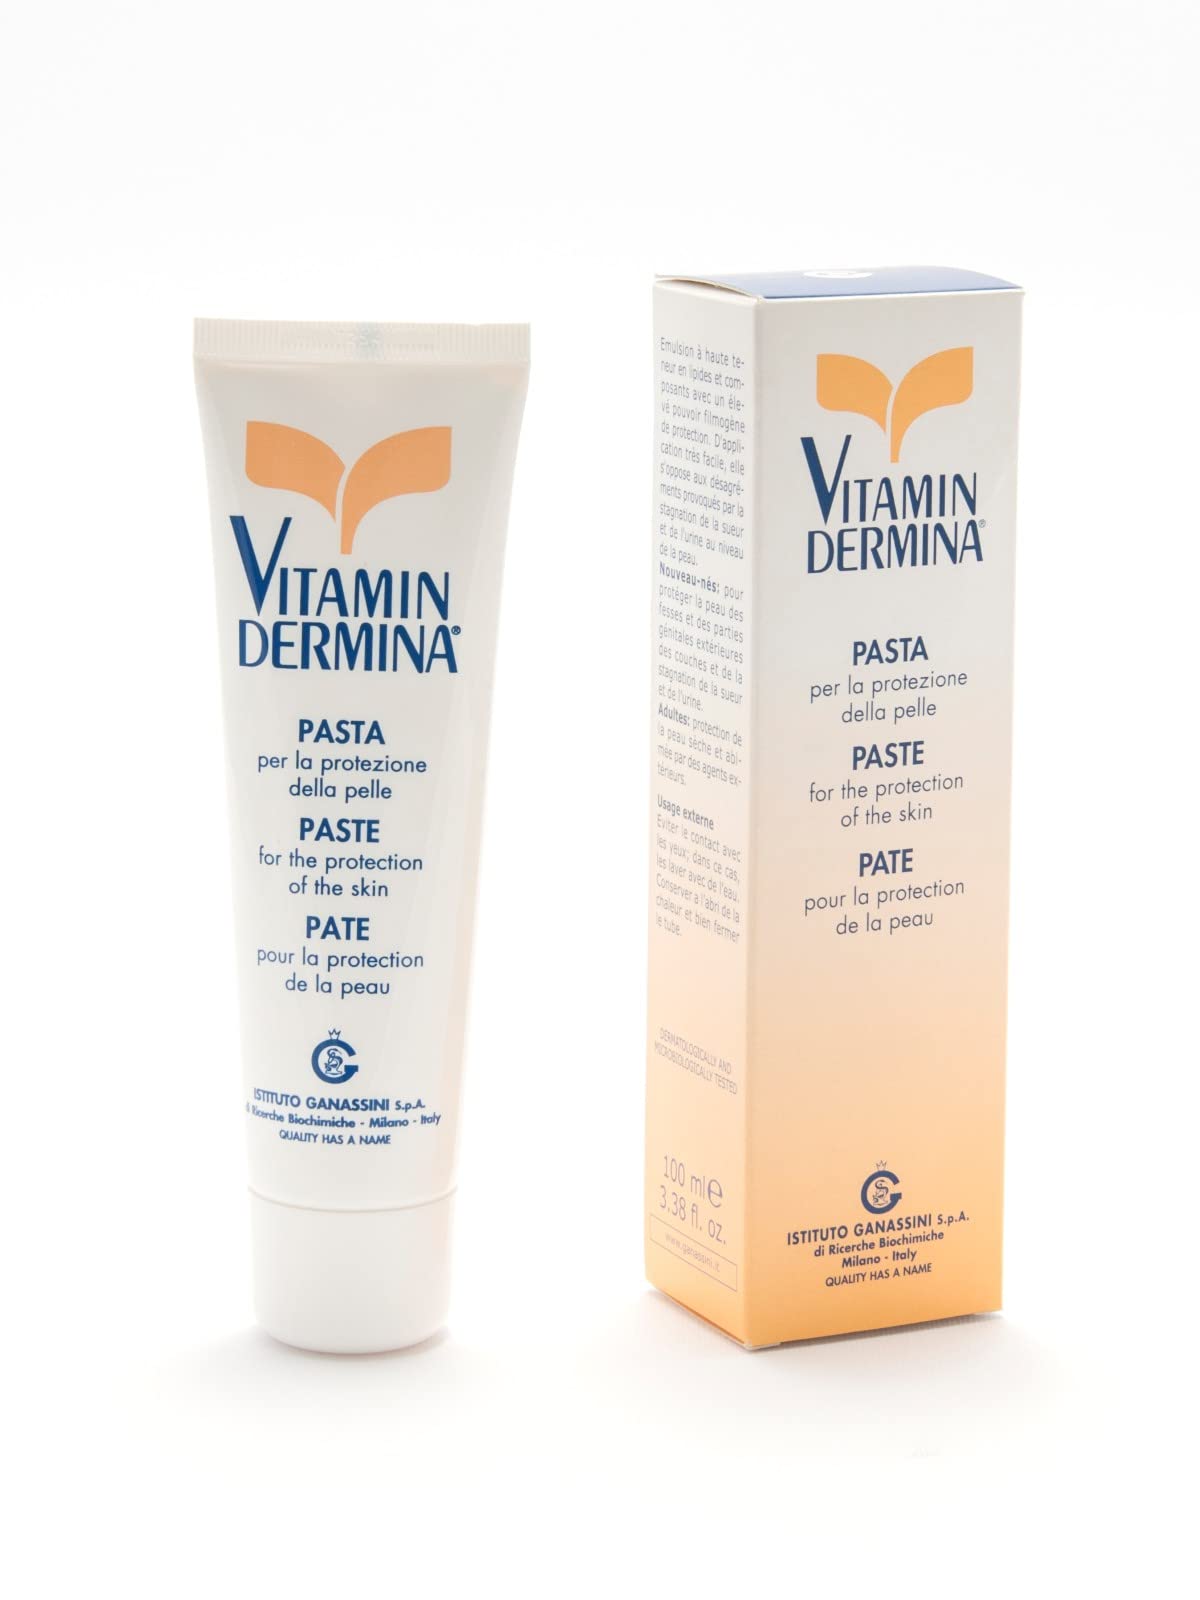 Creme vitamindermina pasta protettiva per la pelle 100 ml